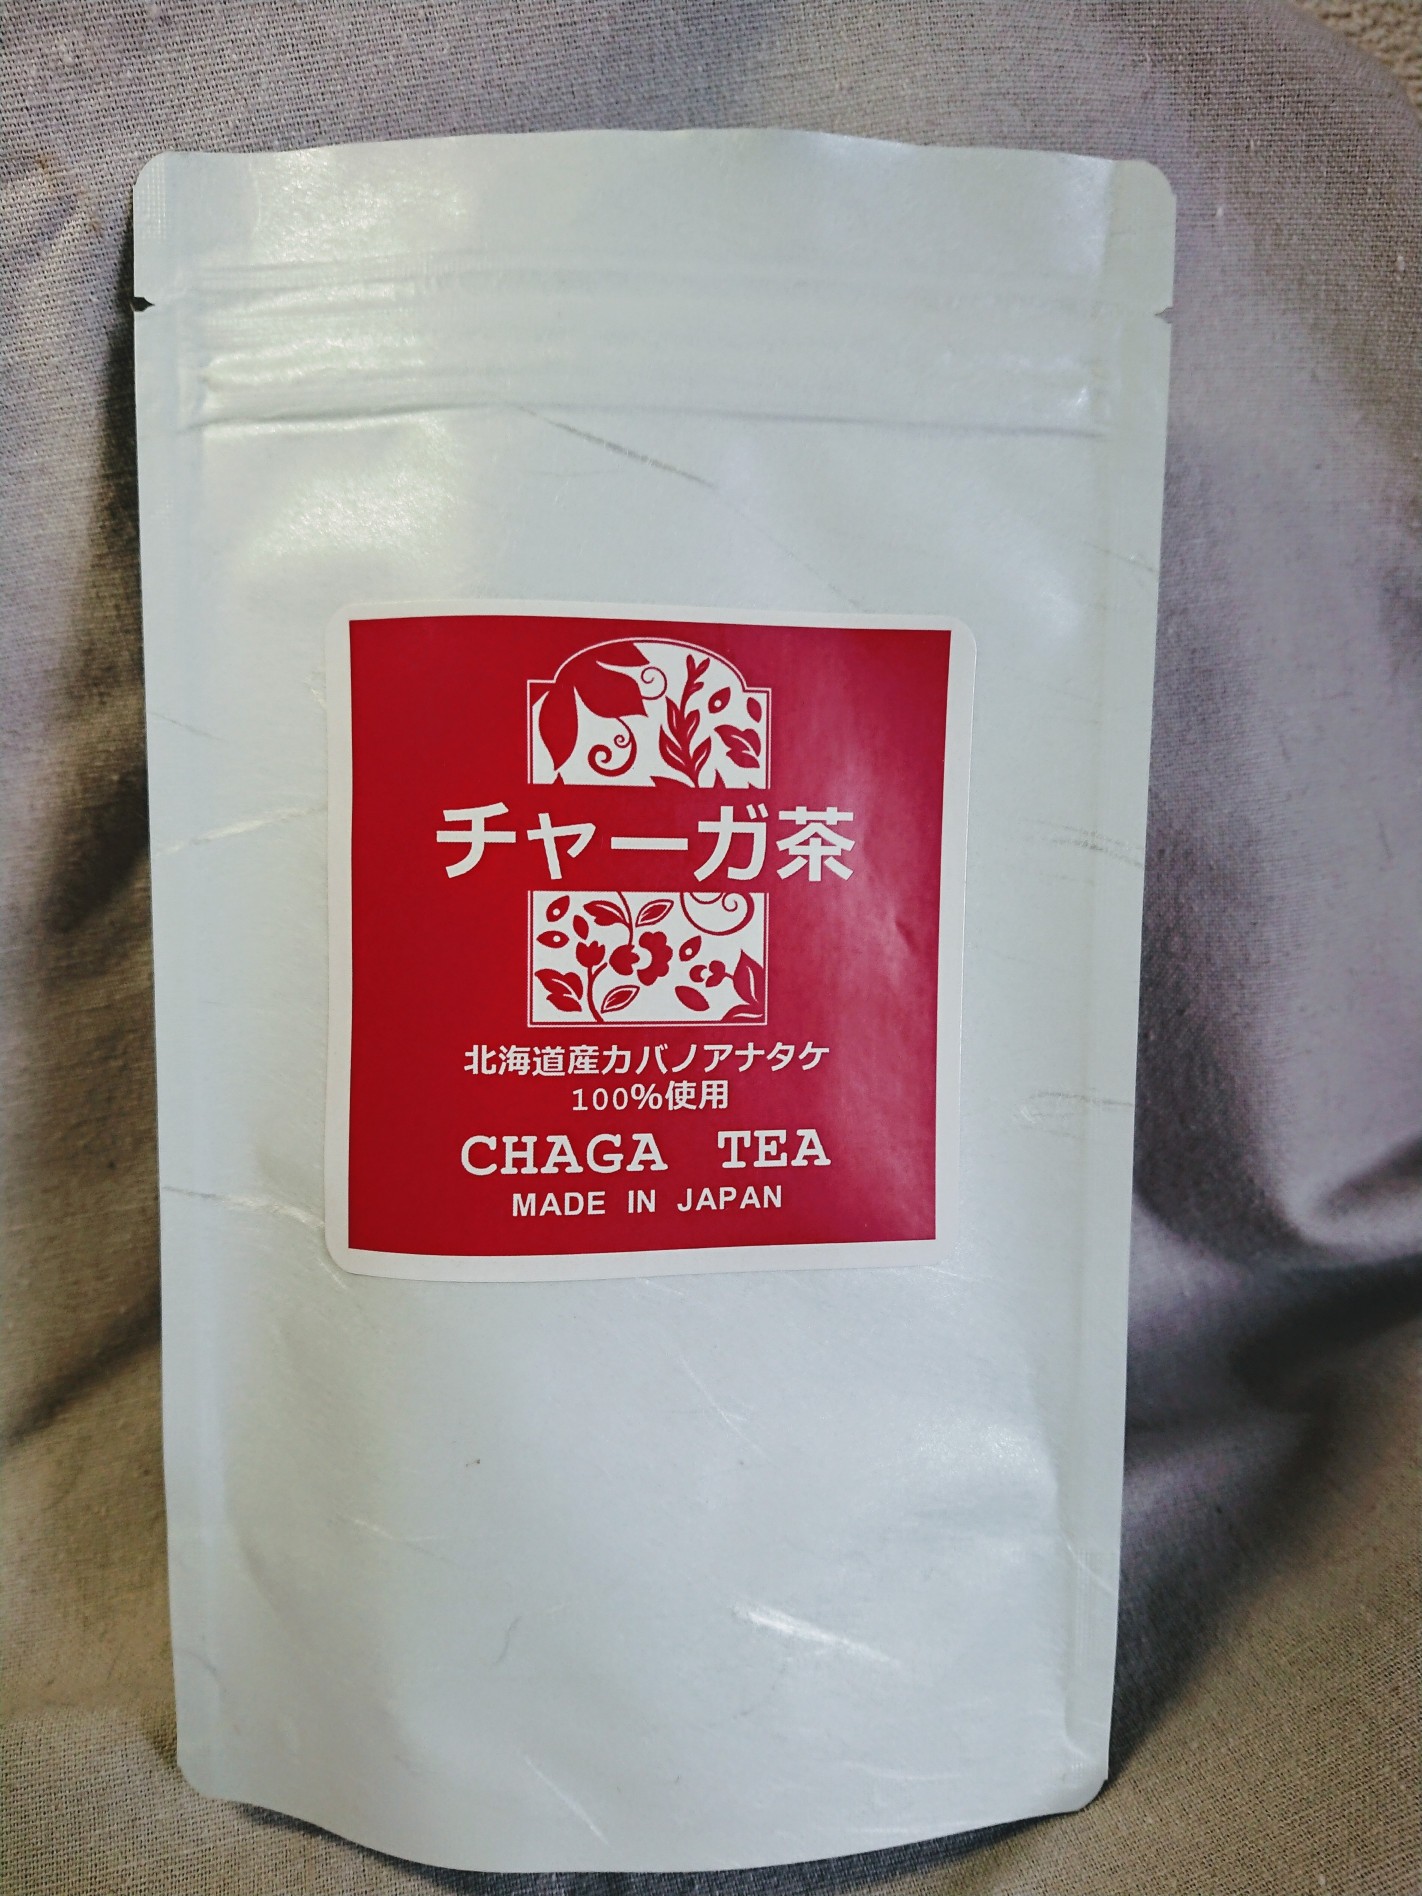 CHAGA TEA (tea bag)  